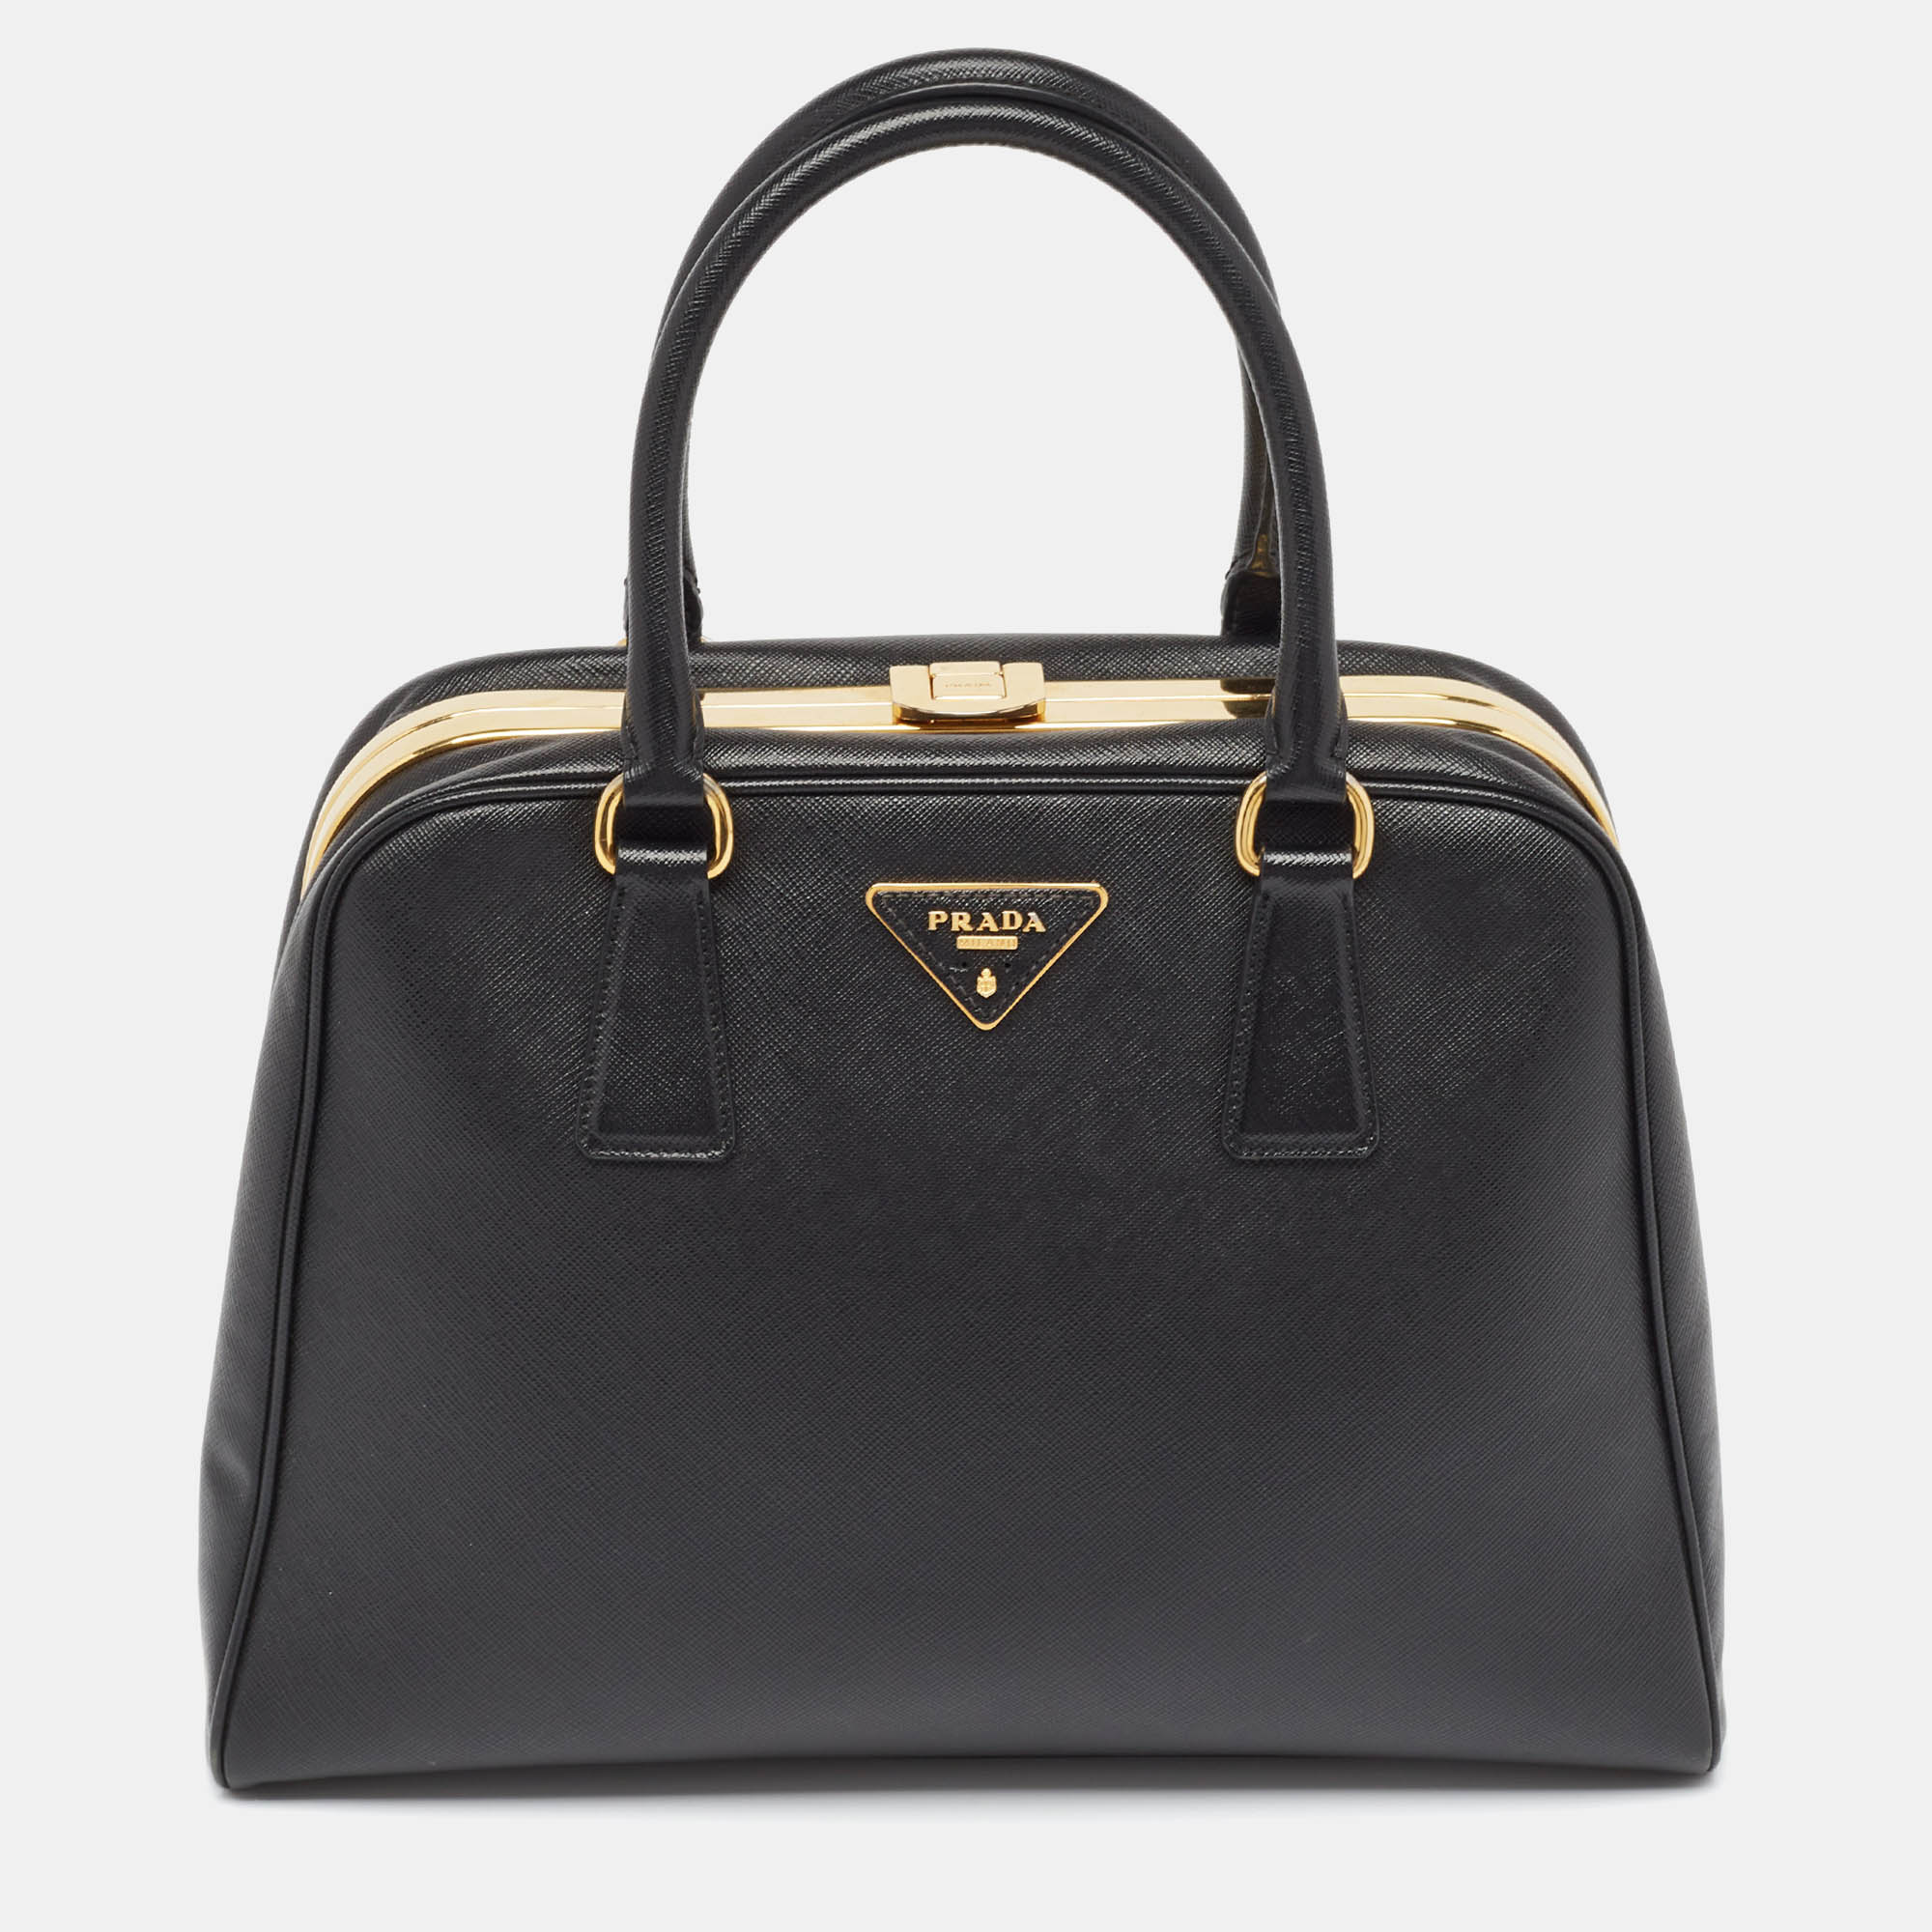 Prada black saffiano lux leather pyramid frame satchel